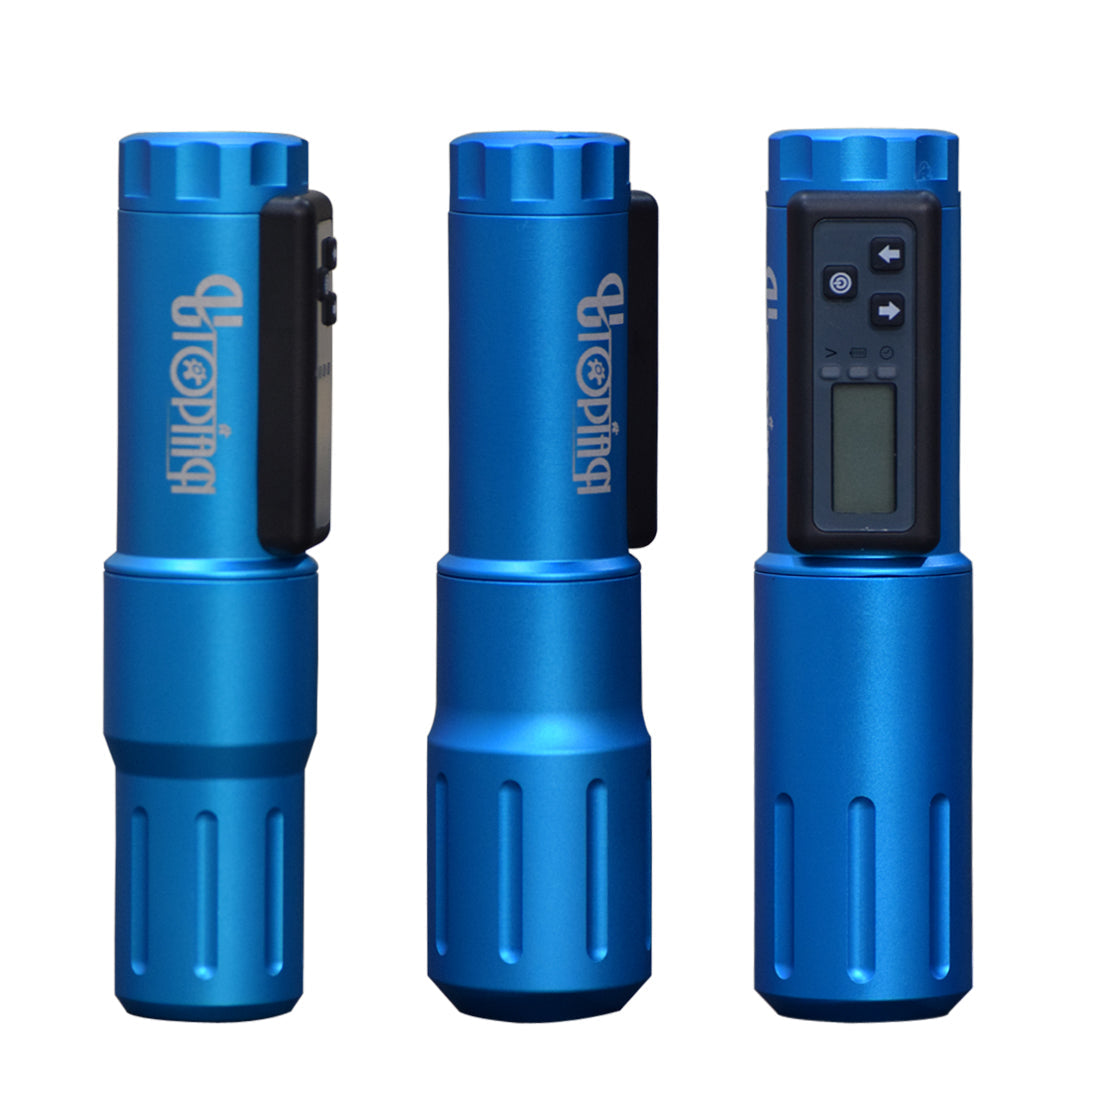 Utopian Kabellos V1 Wireless tattoo pen machine (blue)